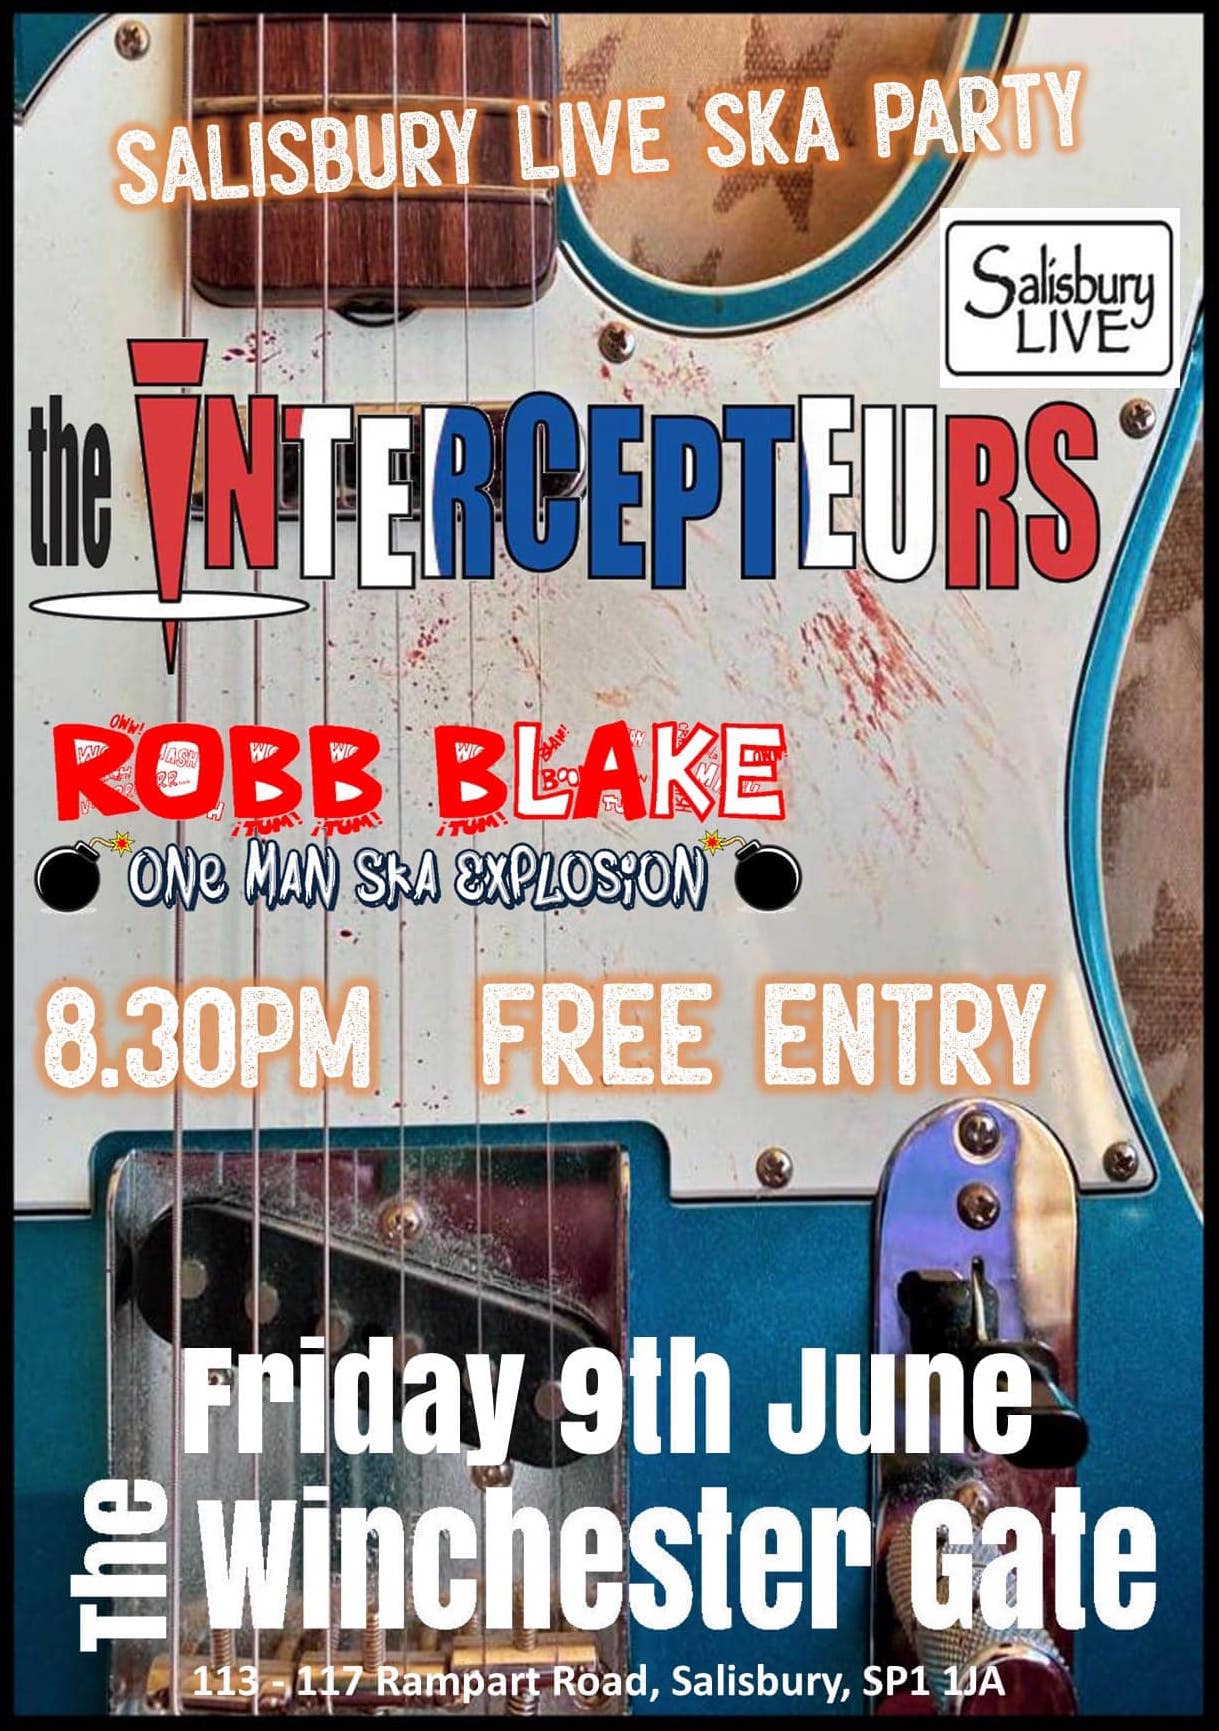 Salisbury Live Ska Party with The Intercepteurs + Robb Blake